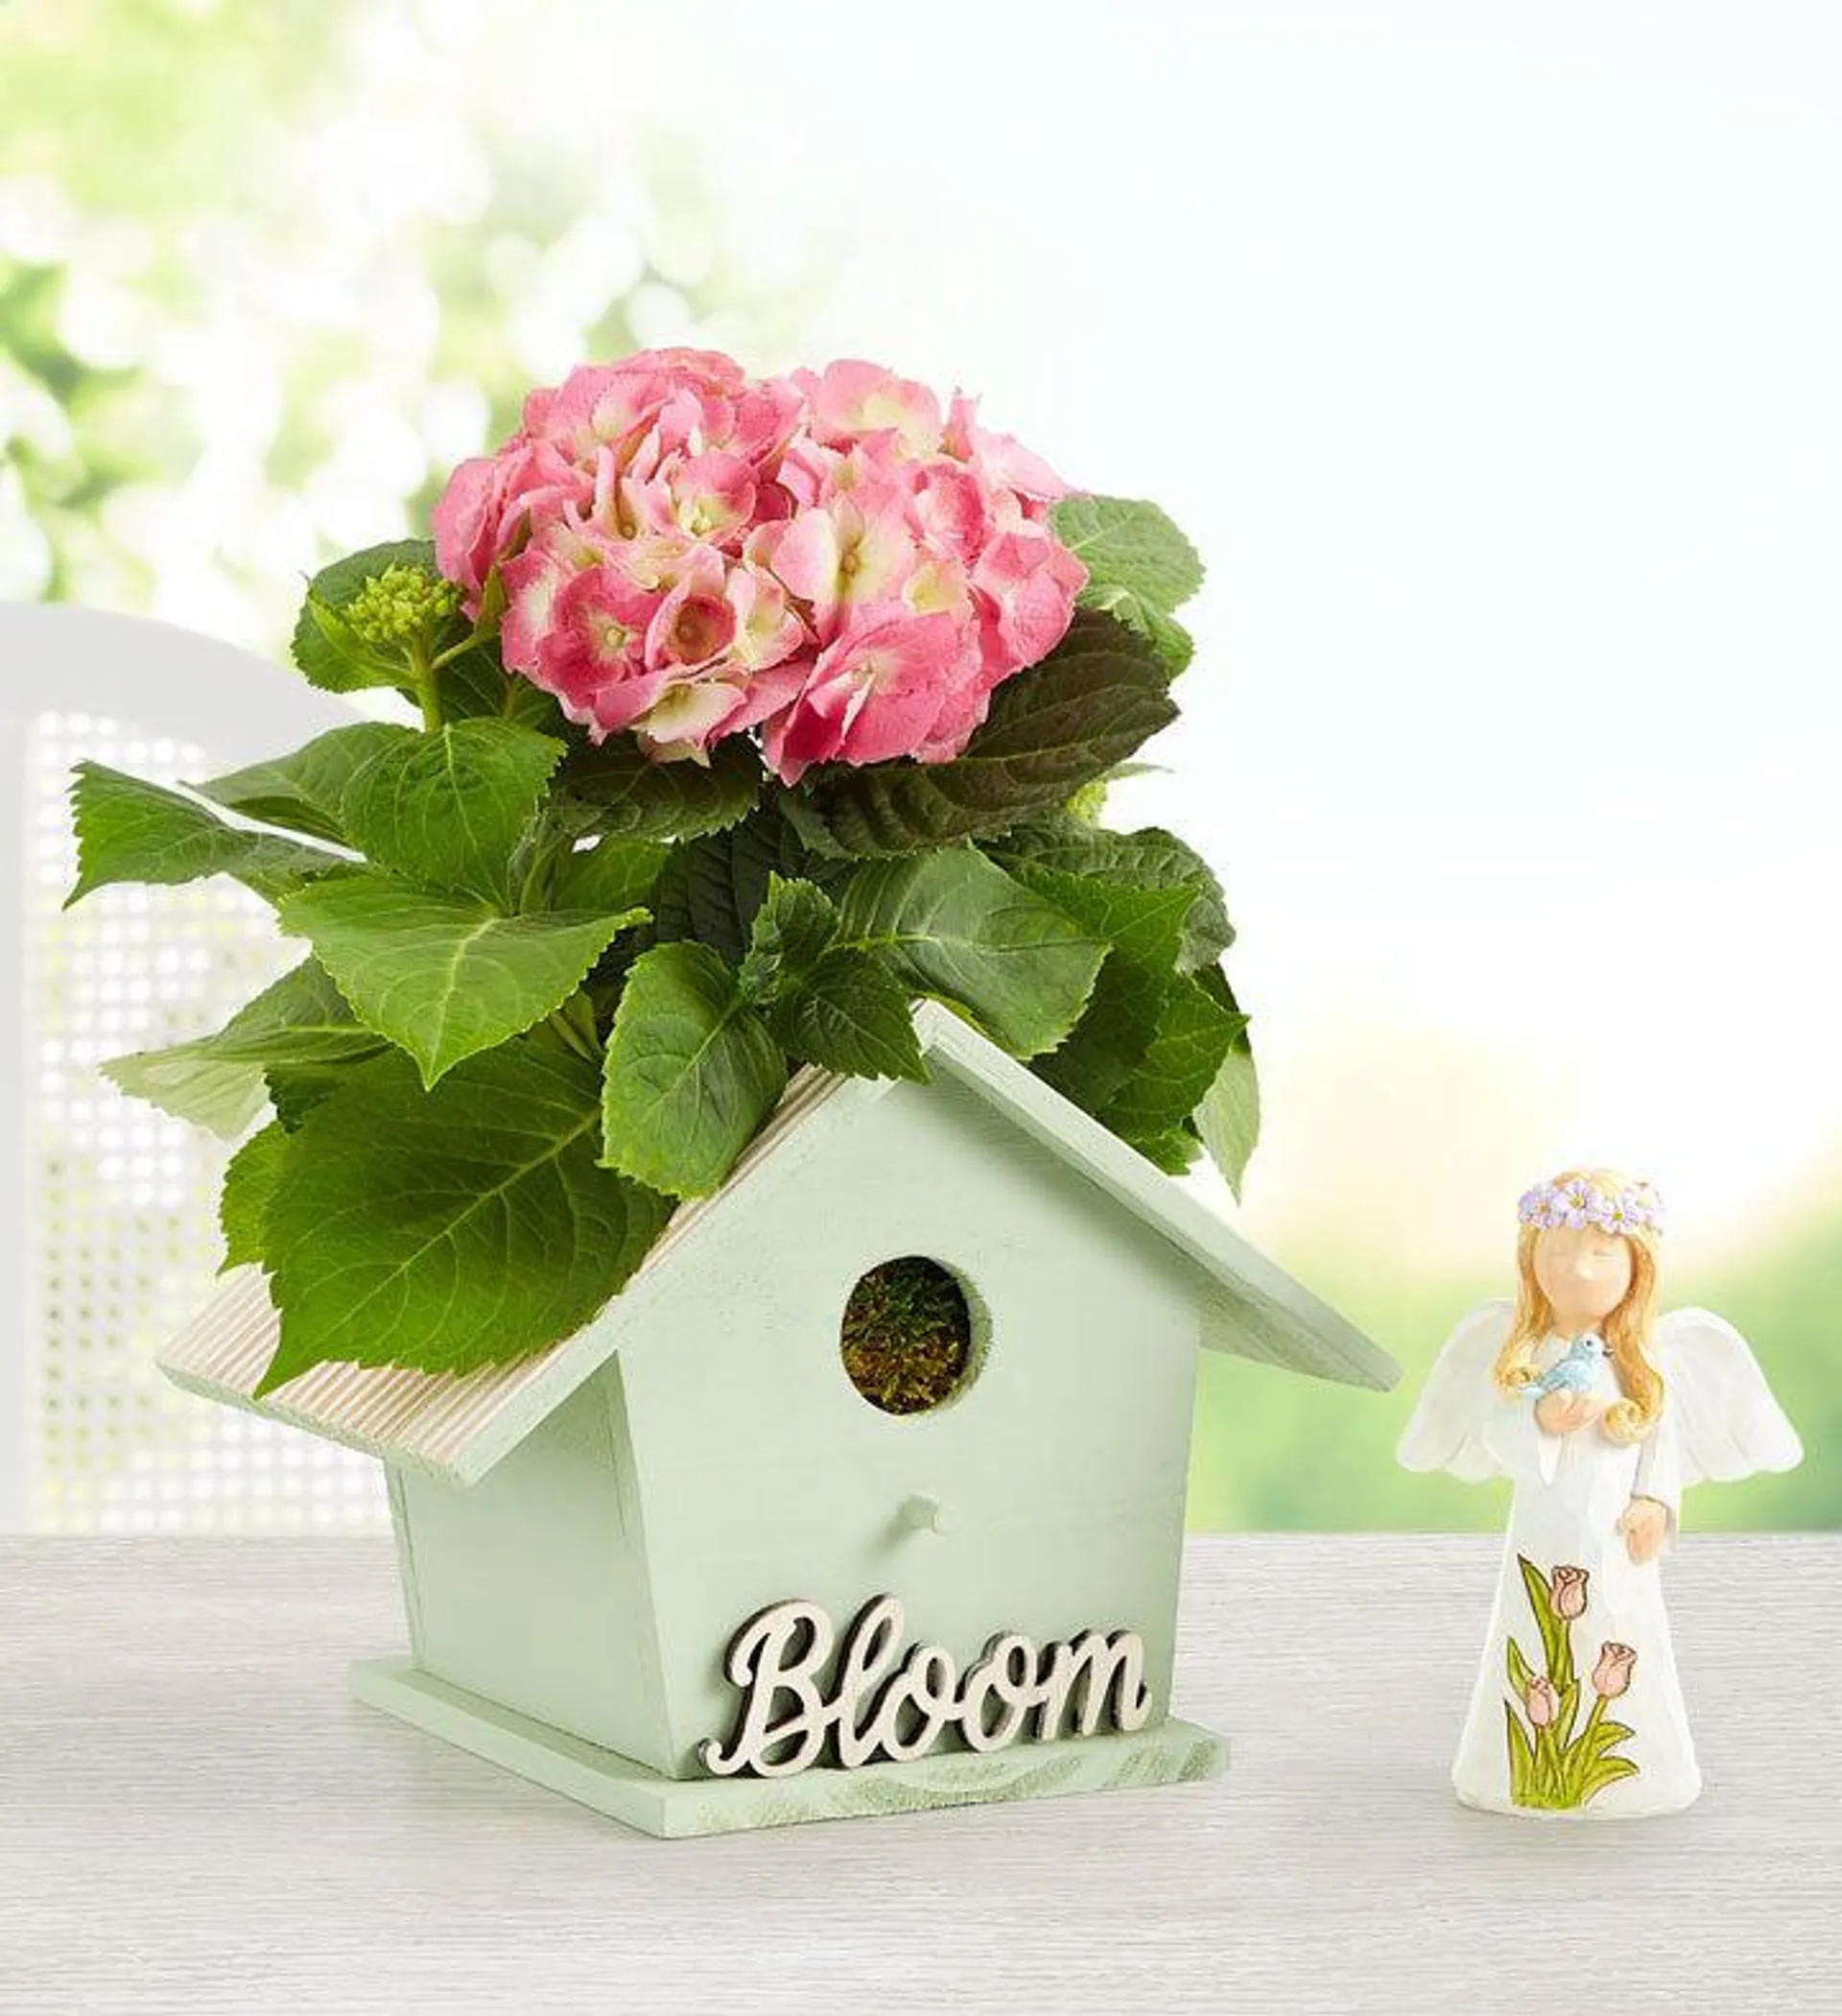 Bird House of Blooms ®